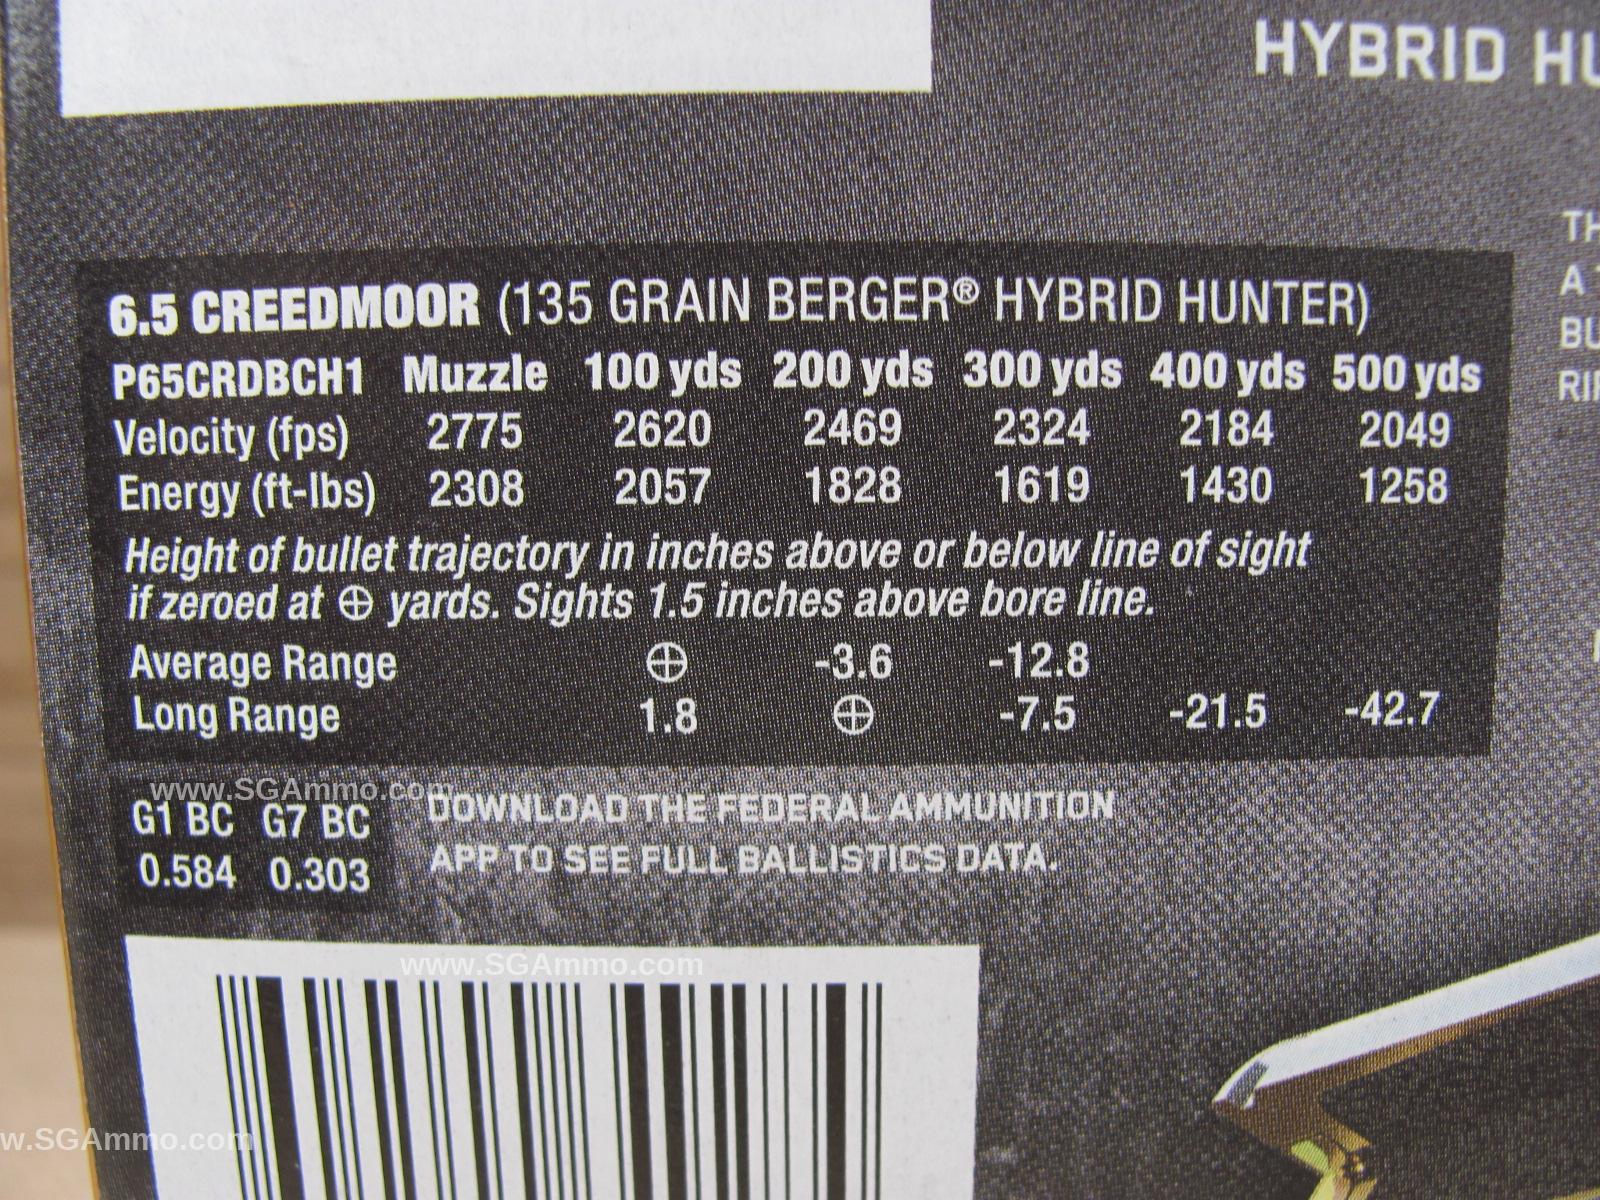 20 Round Box - 6.5 Creedmoor 135 Grain Federal Premium Berger Hybrid Hunter Ammo - P65CRDBCH1